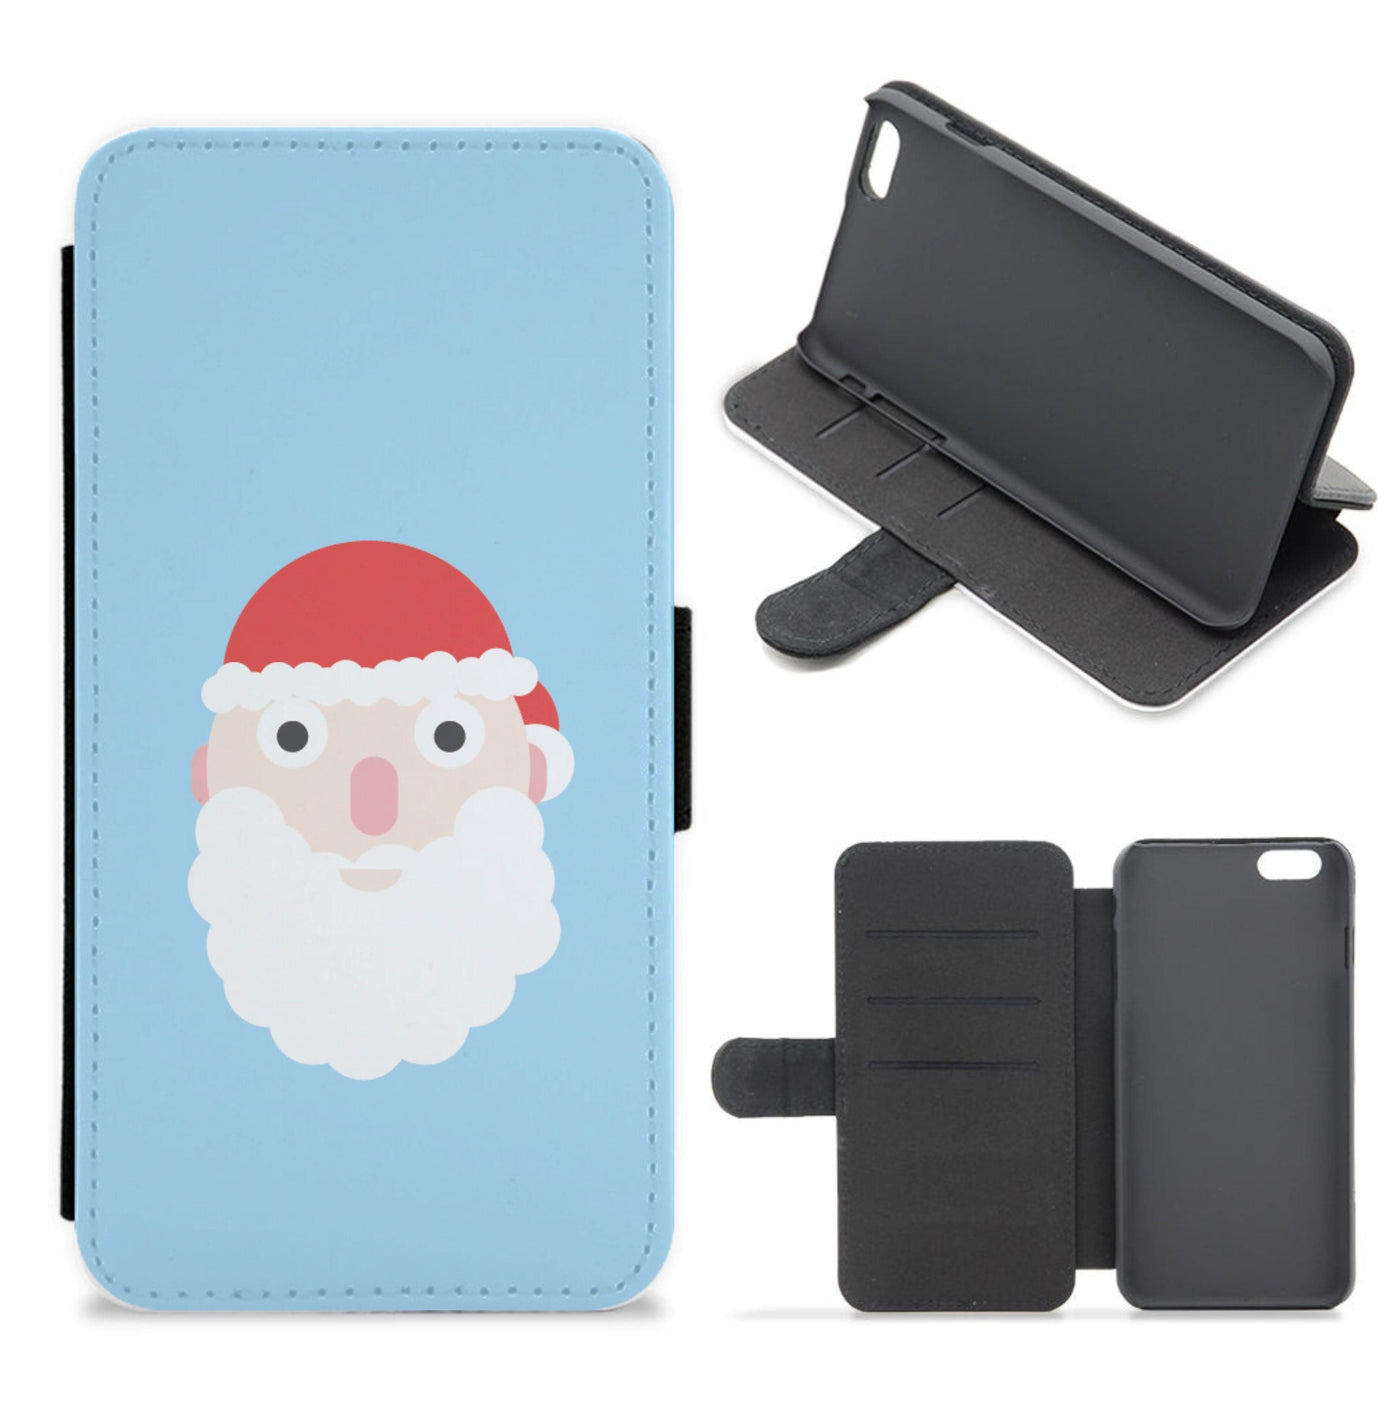 Santa's Face - Christmas Flip / Wallet Phone Case